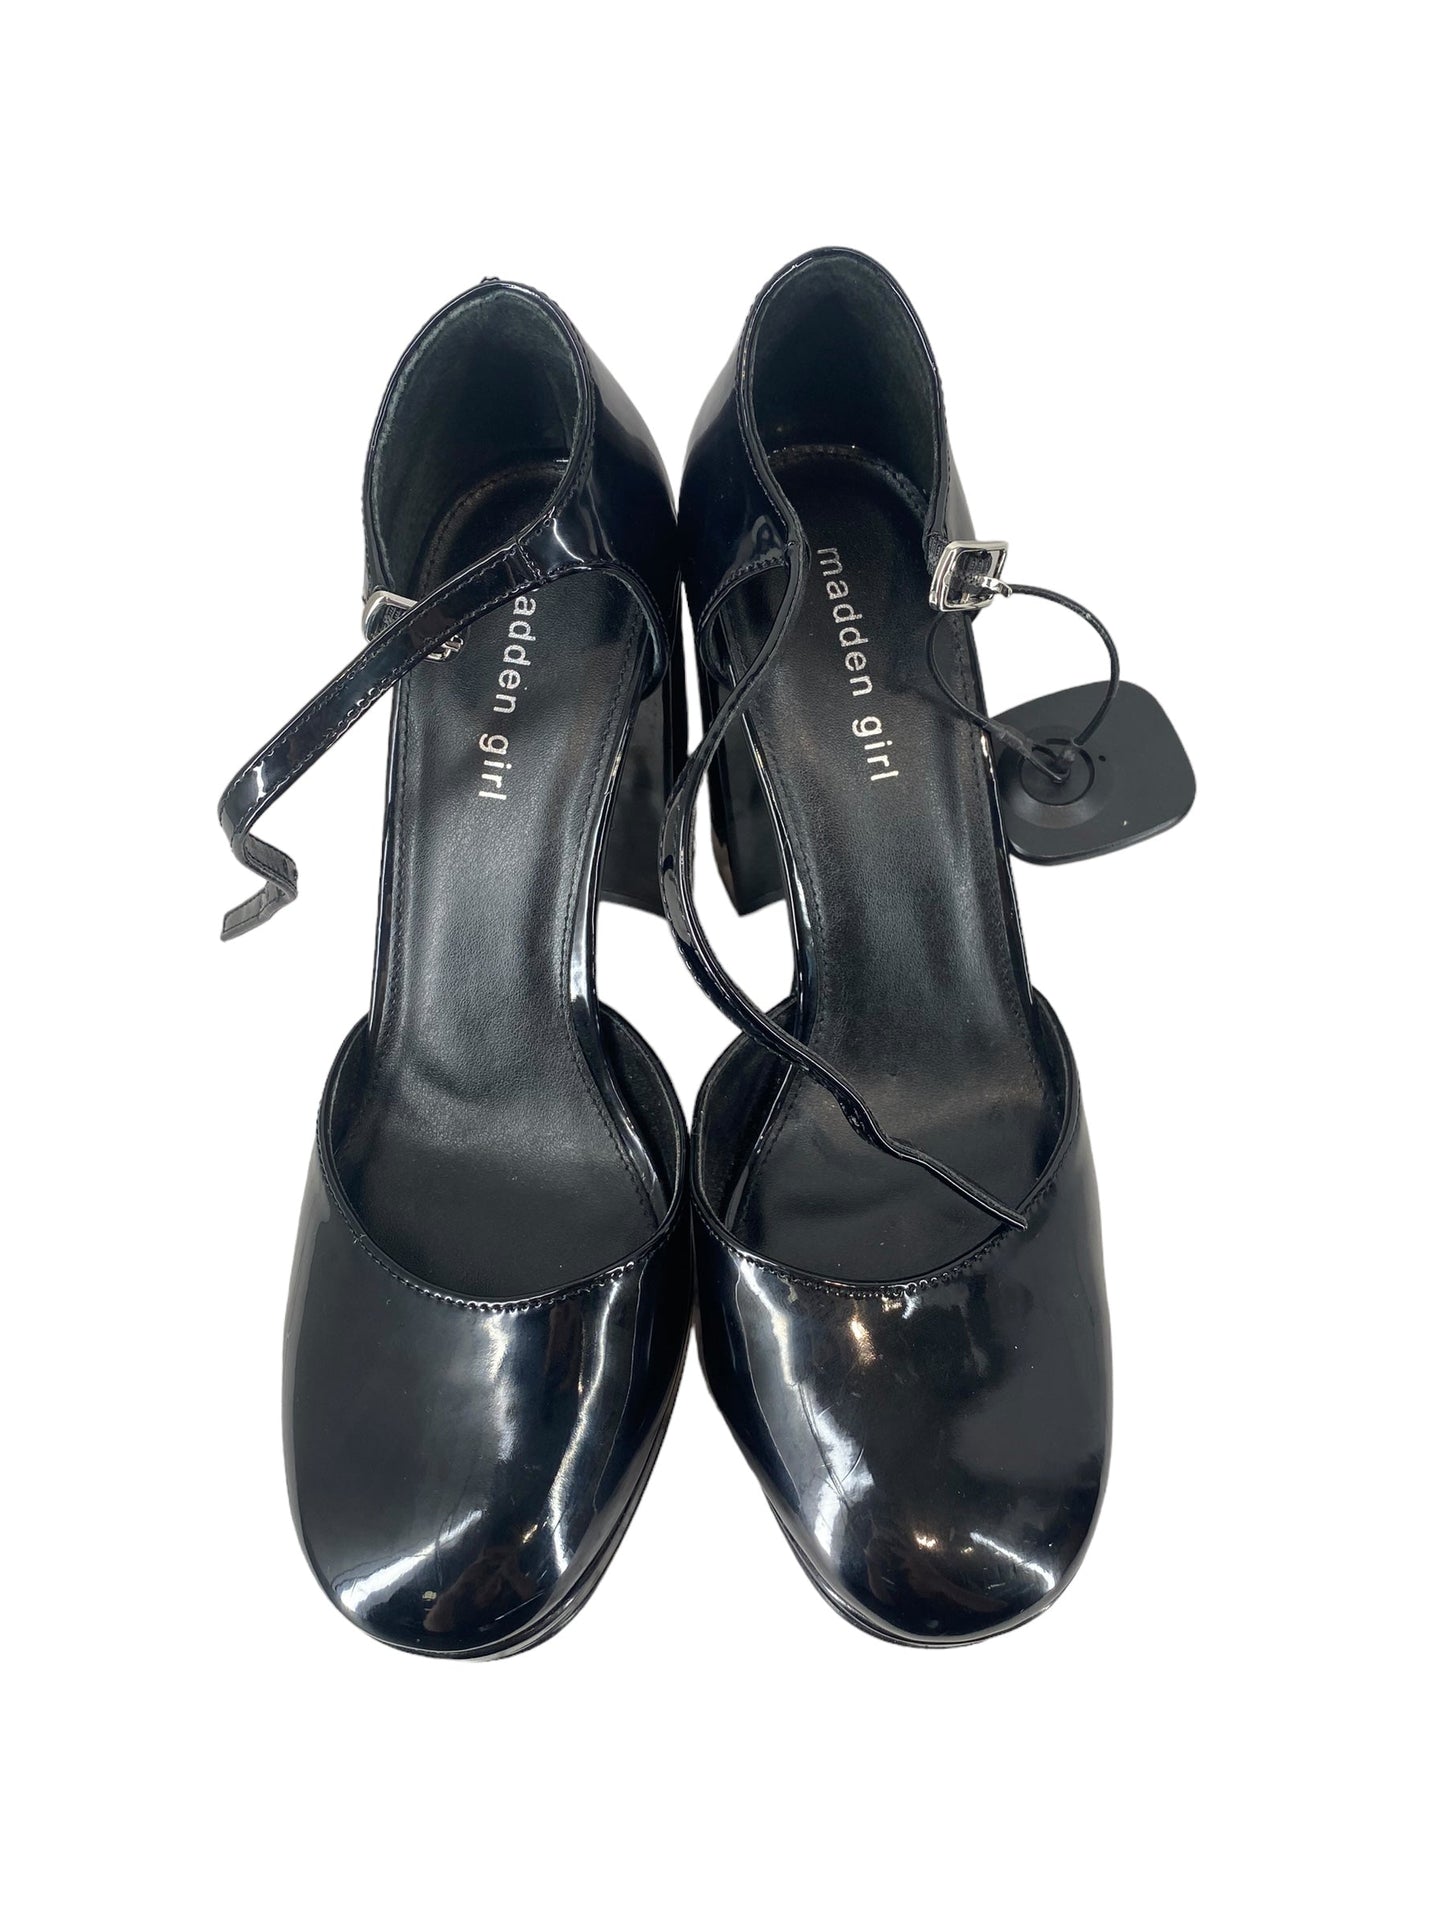 Black Shoes Heels Block Madden Girl, Size 9.5